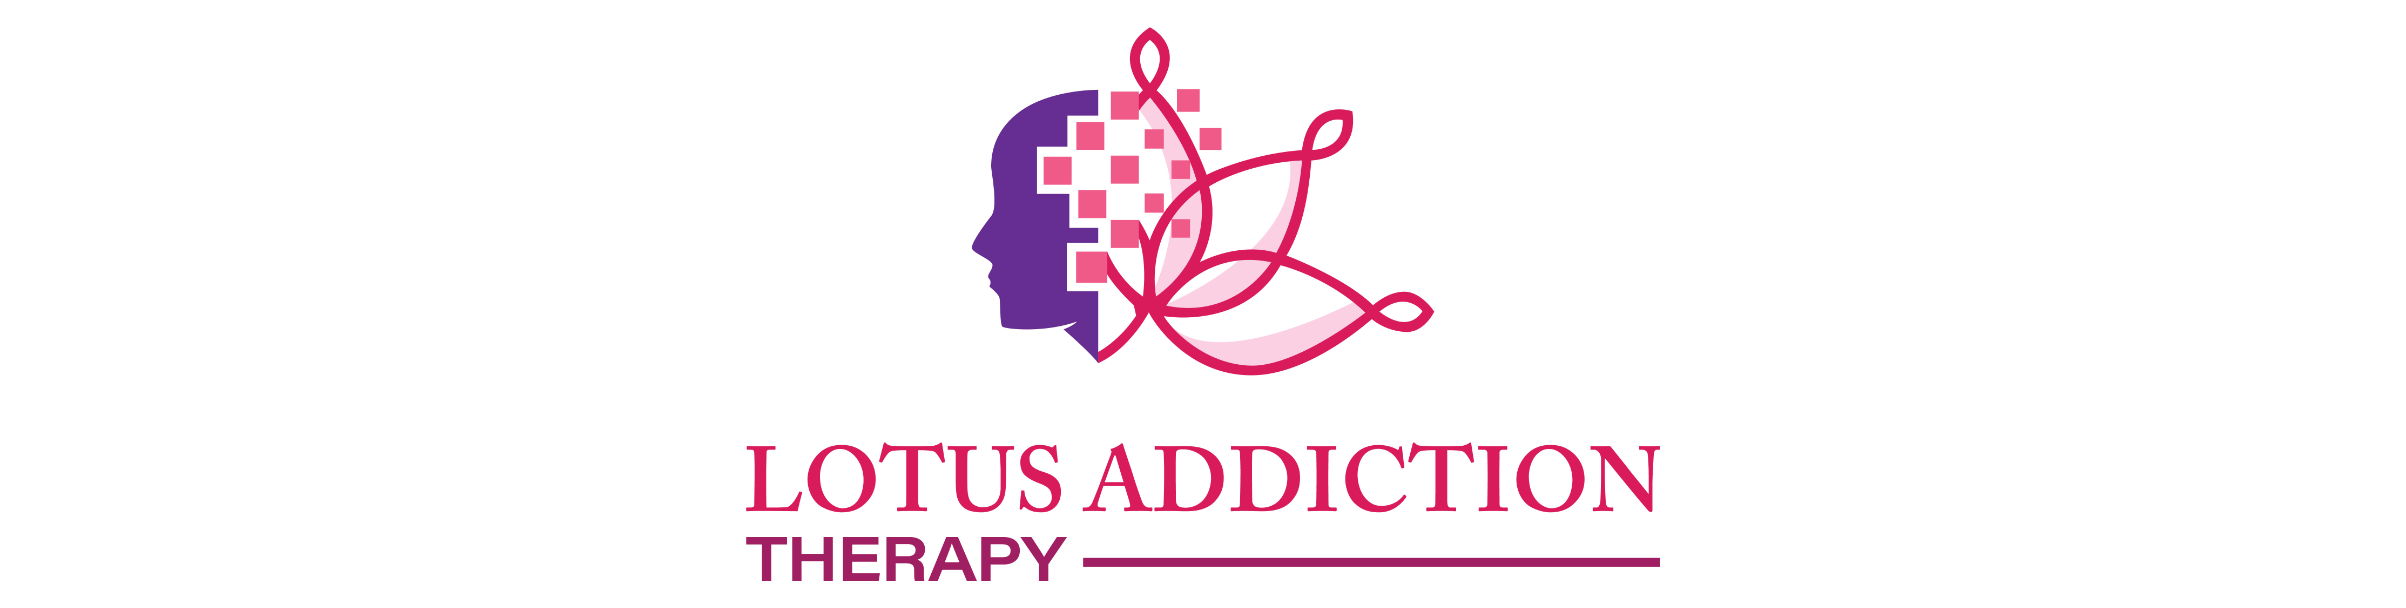 Lotus Addiction Therapy logo